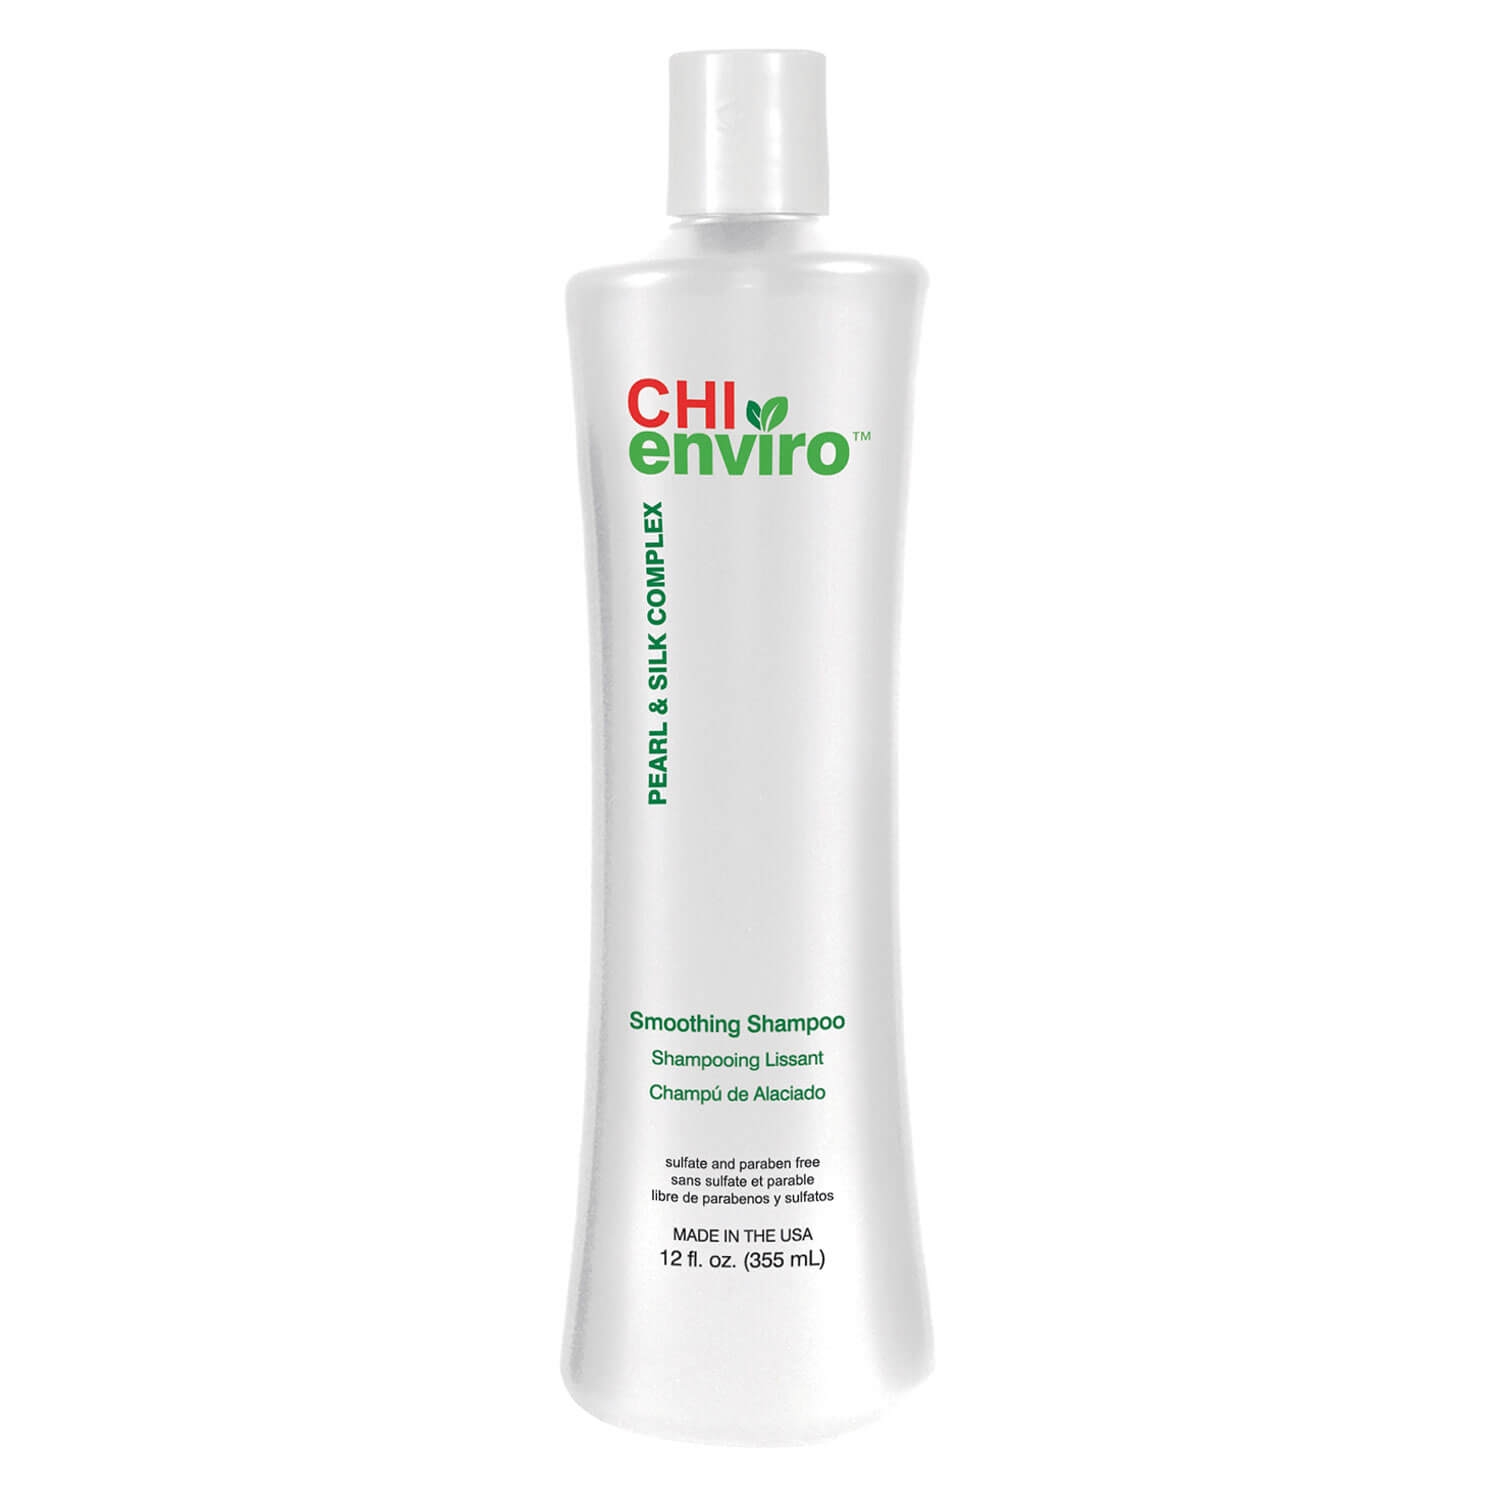 Produktbild von CHI enviro - Smoothing Shampoo